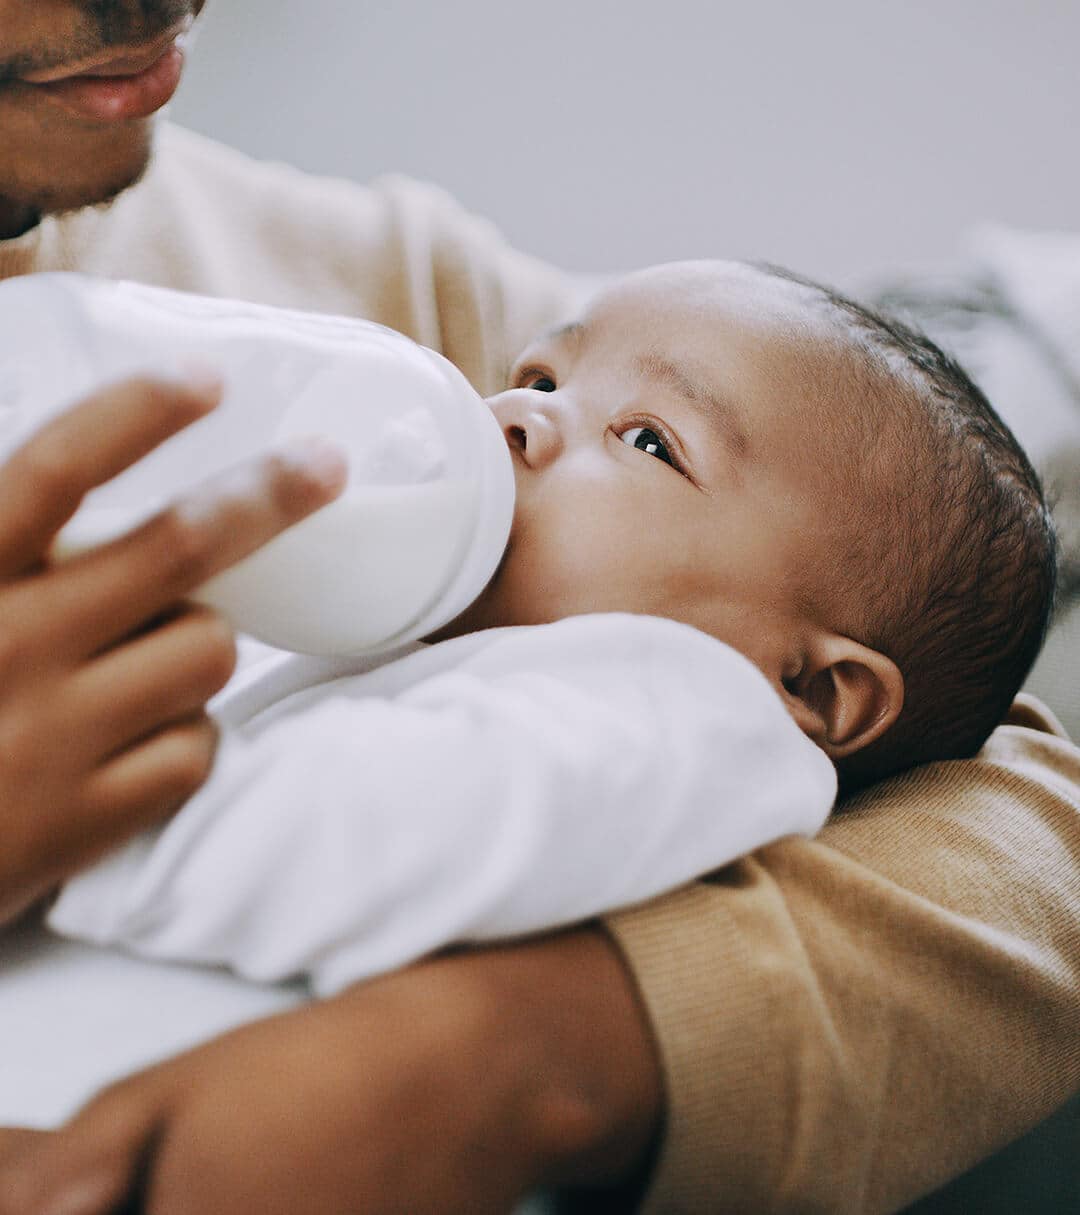 Man feeding a baby with a milk bottle 